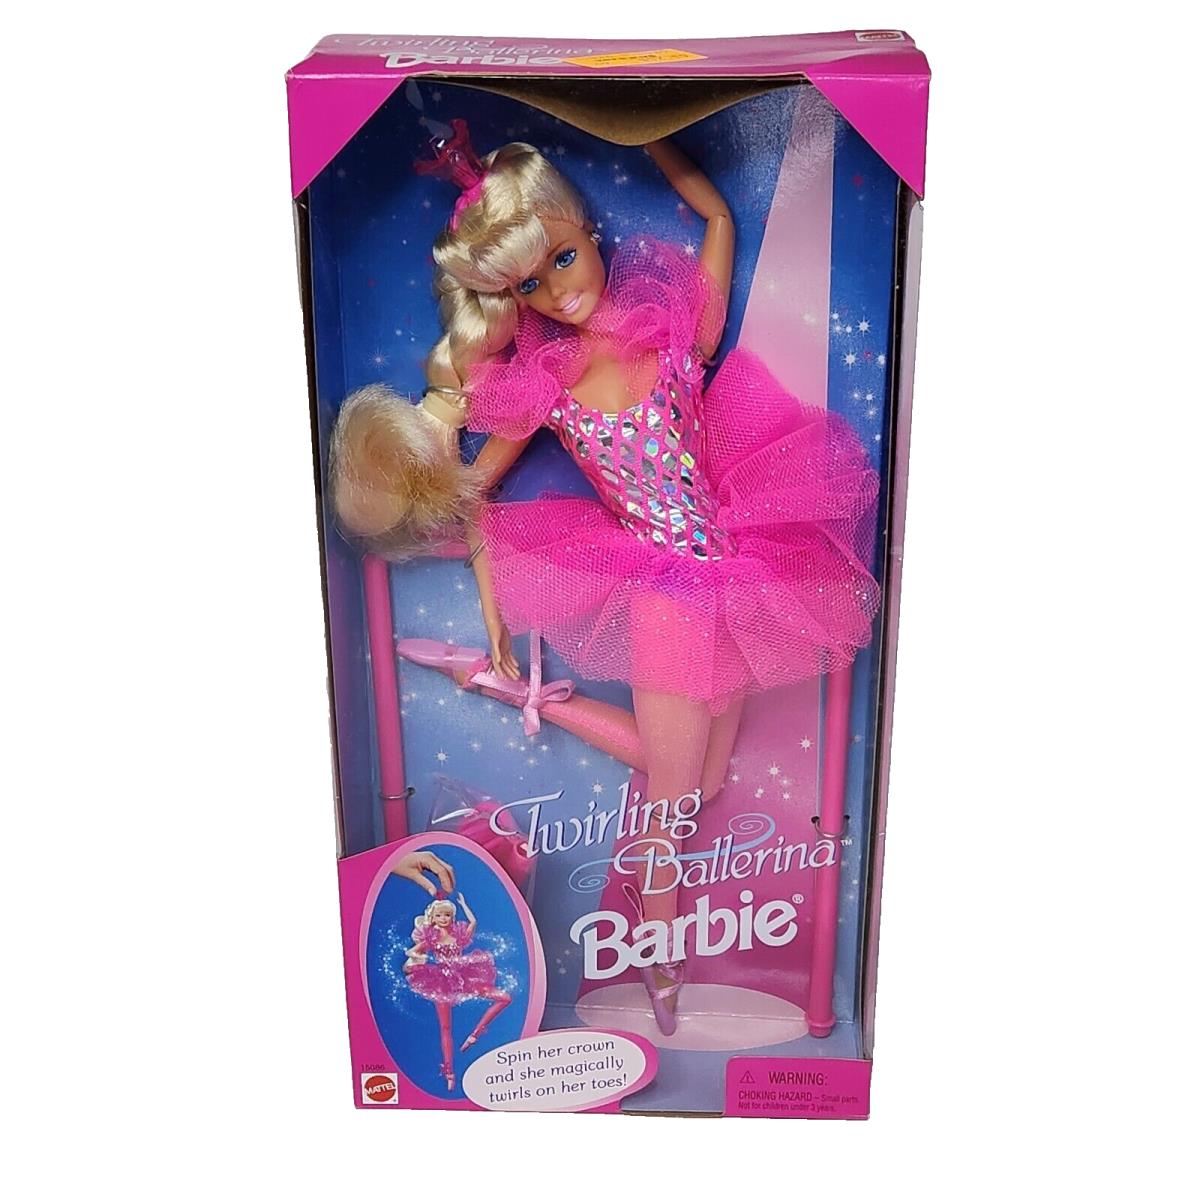 Vintage 1995 Twirling Ballerina Barbie Doll 15086 Mattel IN Box